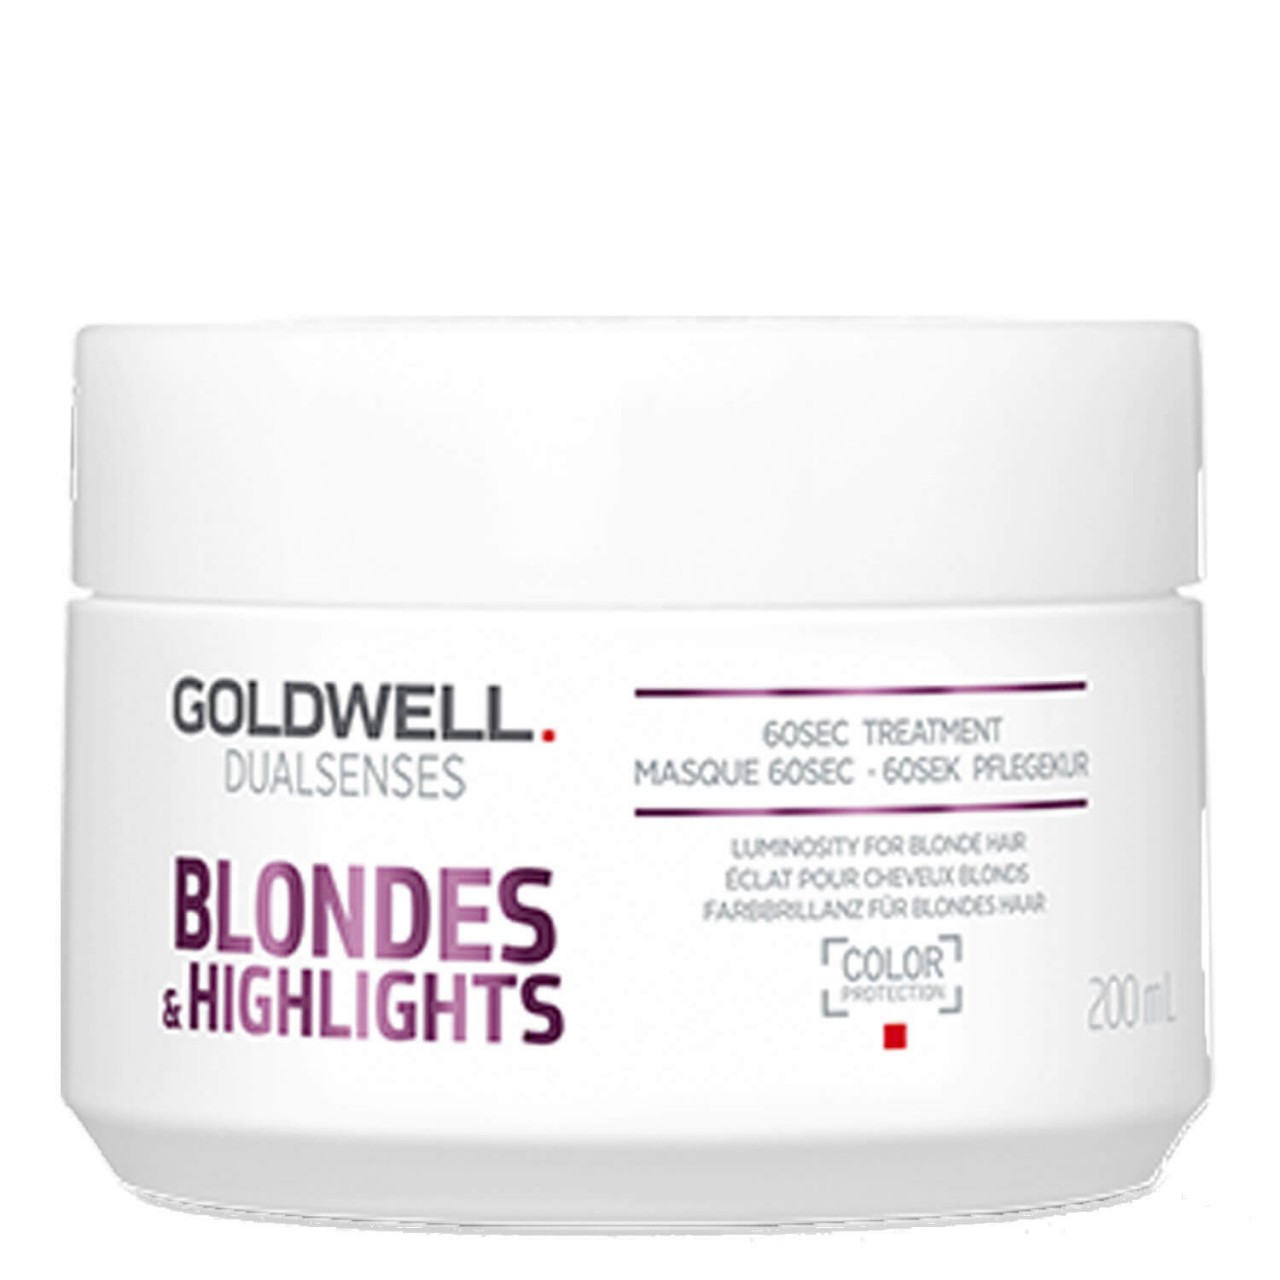 Dualsenses Blondes & Highlights - 60s Treatment von Goldwell